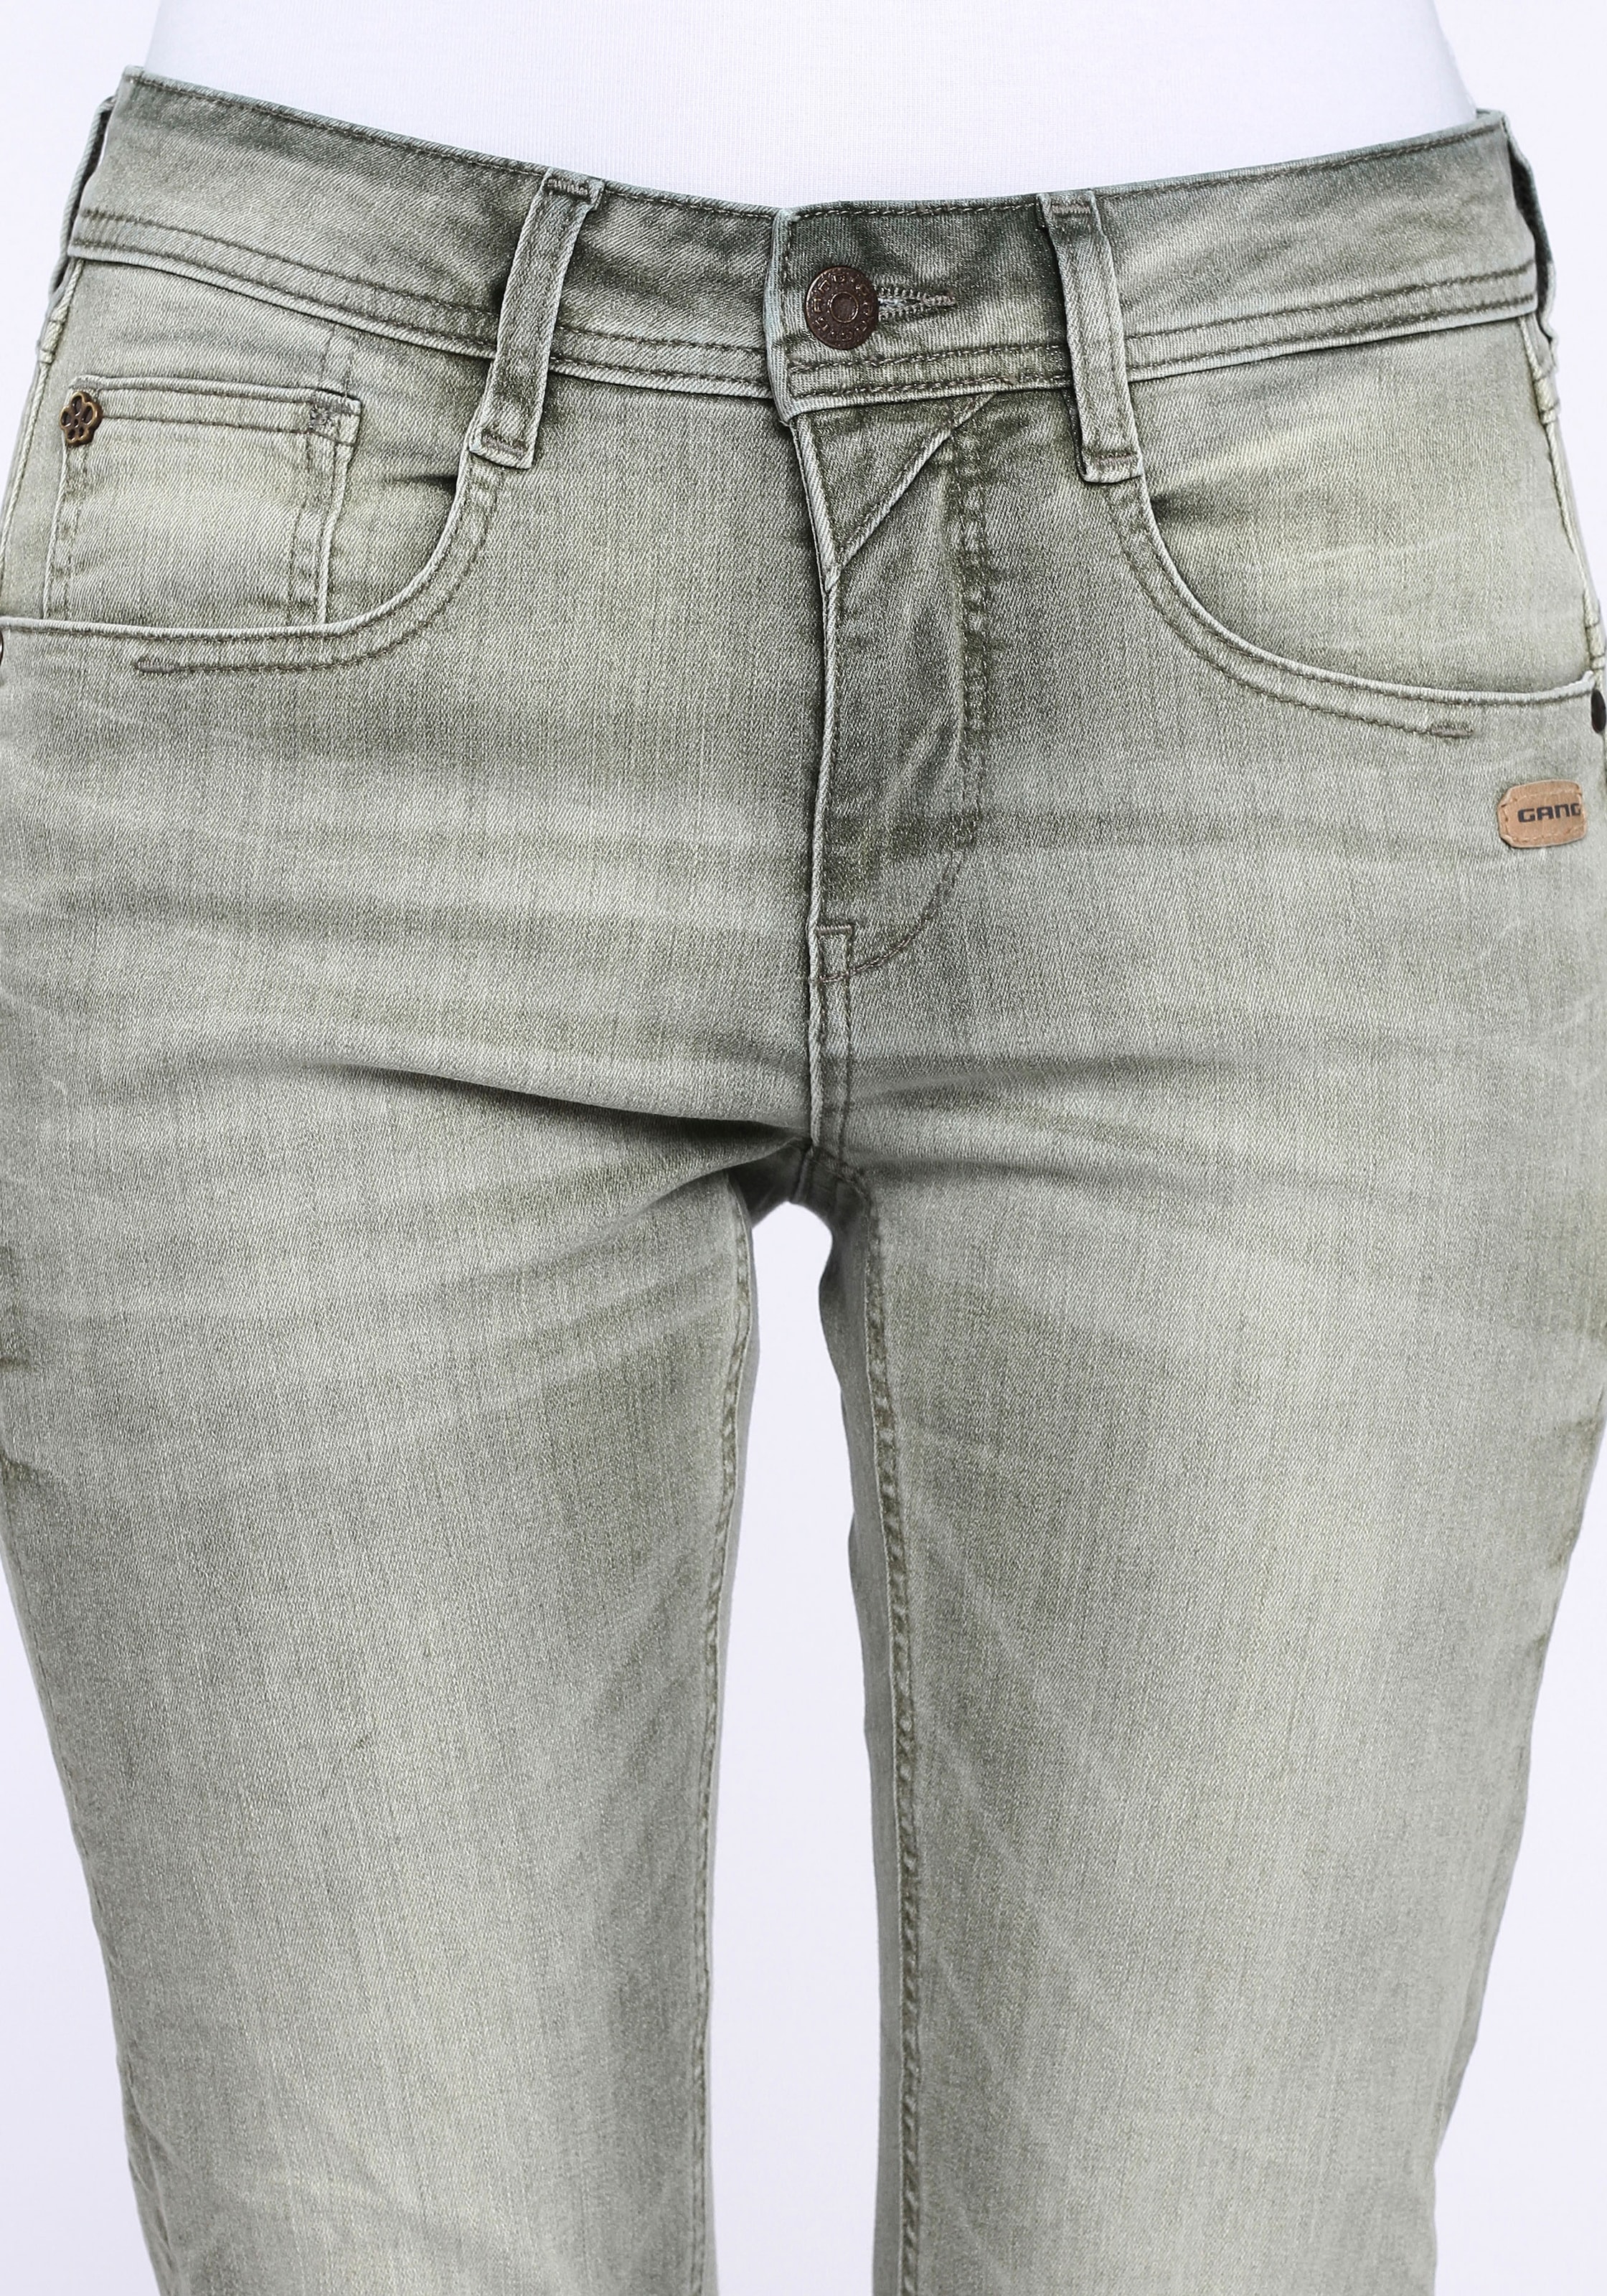 bei Sitz GANG kaufen OTTO perfekter Relax-fit-Jeans online Elasthan-Anteil »94AMELIE«, durch